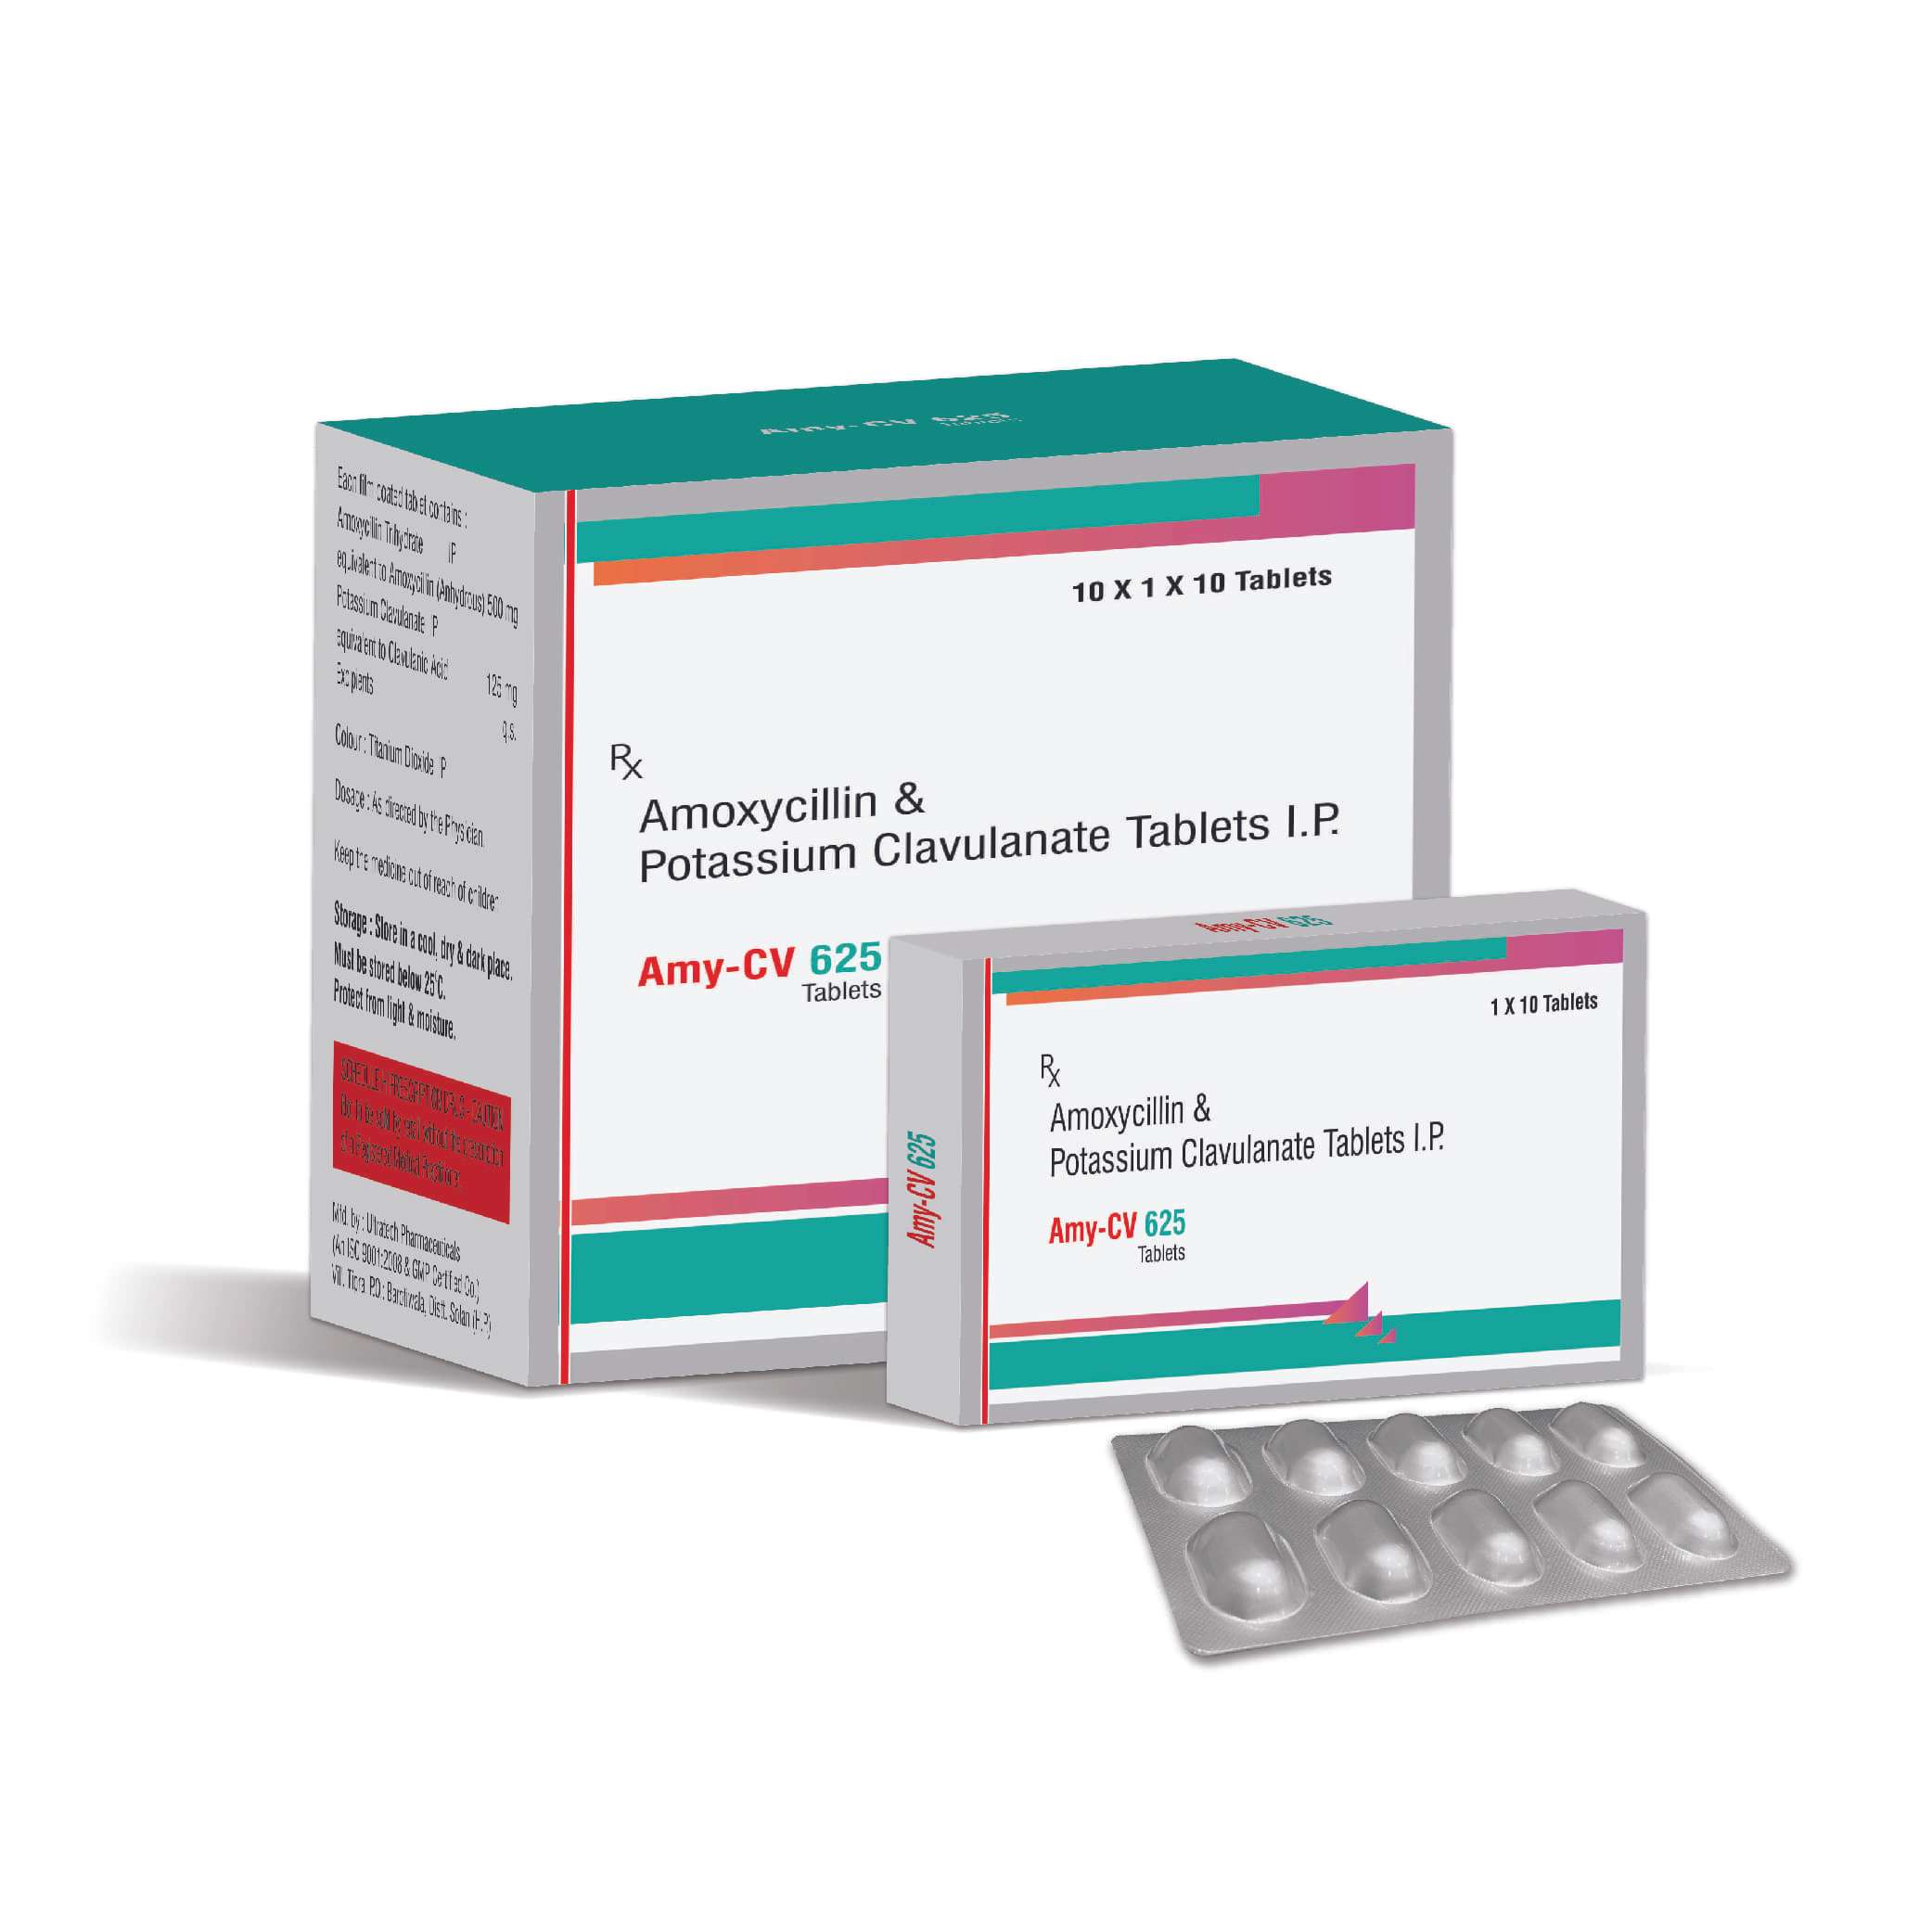 amoxycillin 500 + clavulanate 125 mg tablets